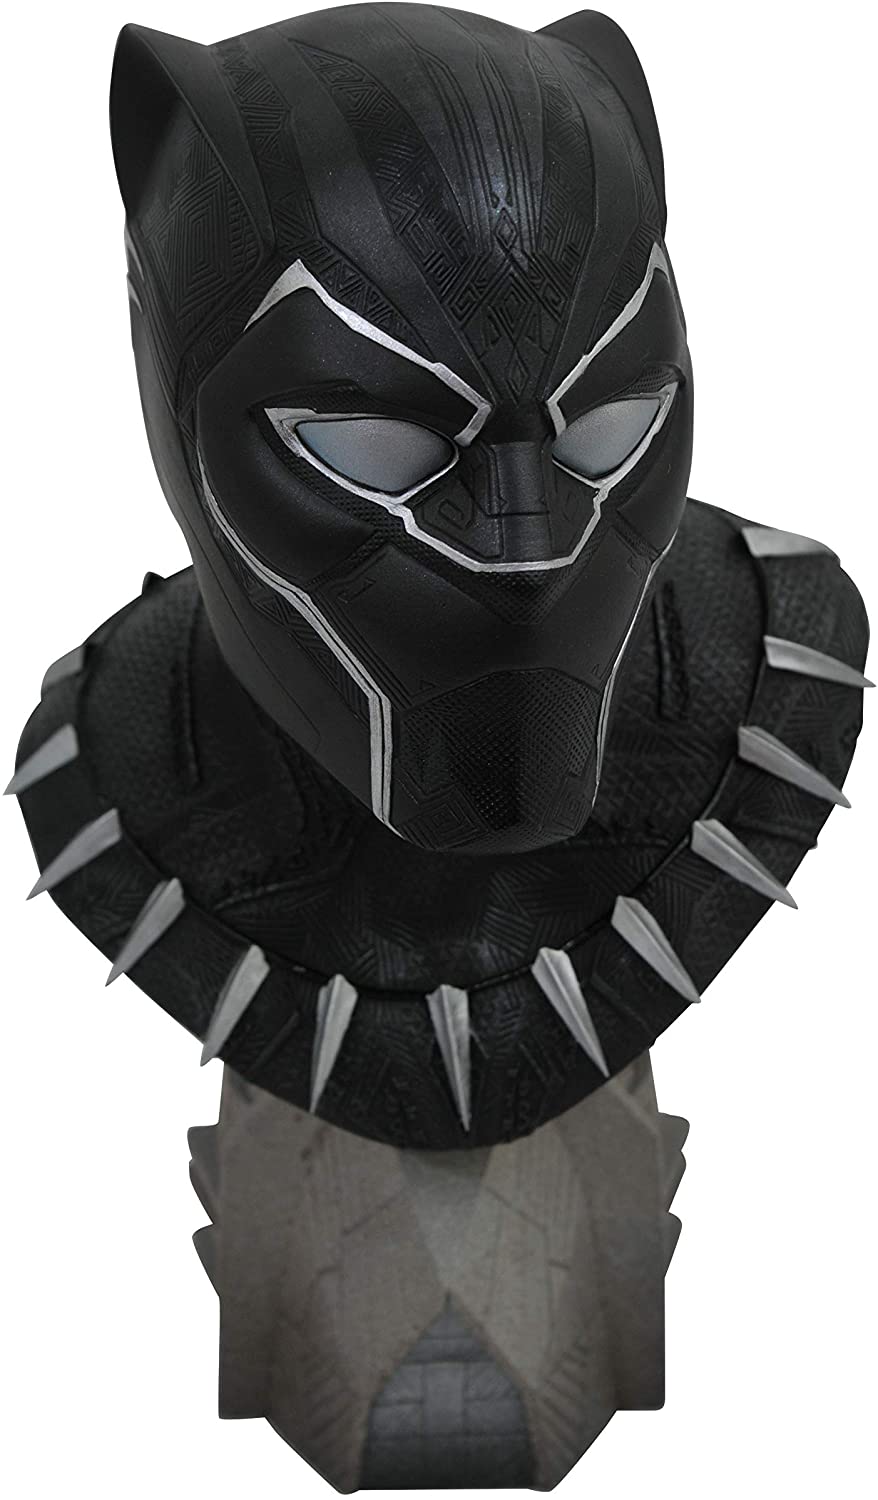 Diamond Select Toys Llc MAR192446 Avengers Black Panther Büste, mehrfarbig